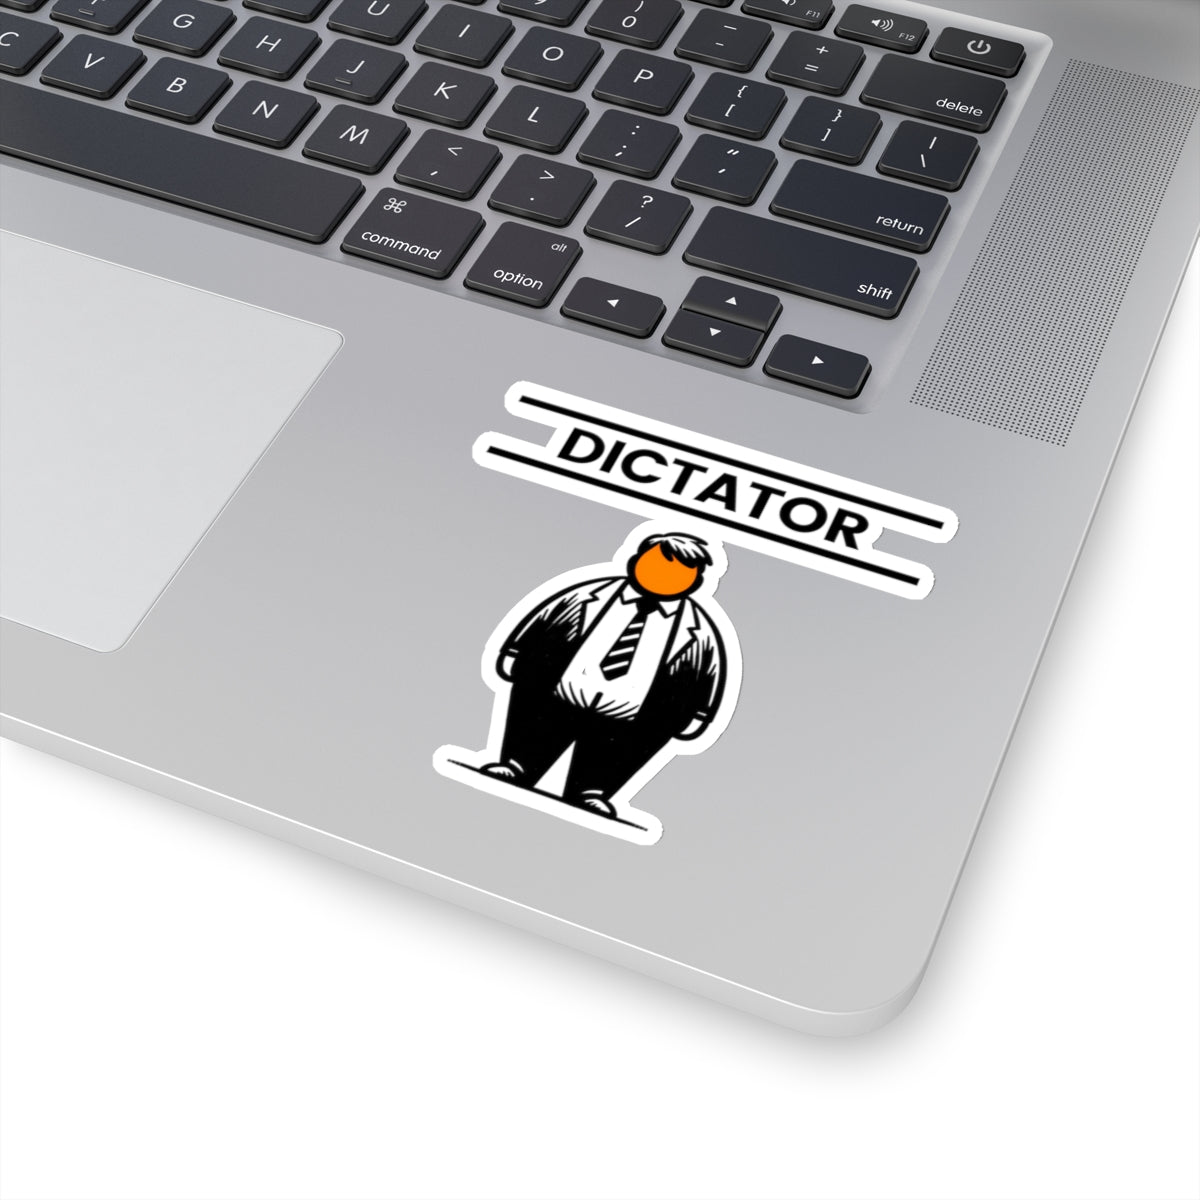 Dictator Sticker